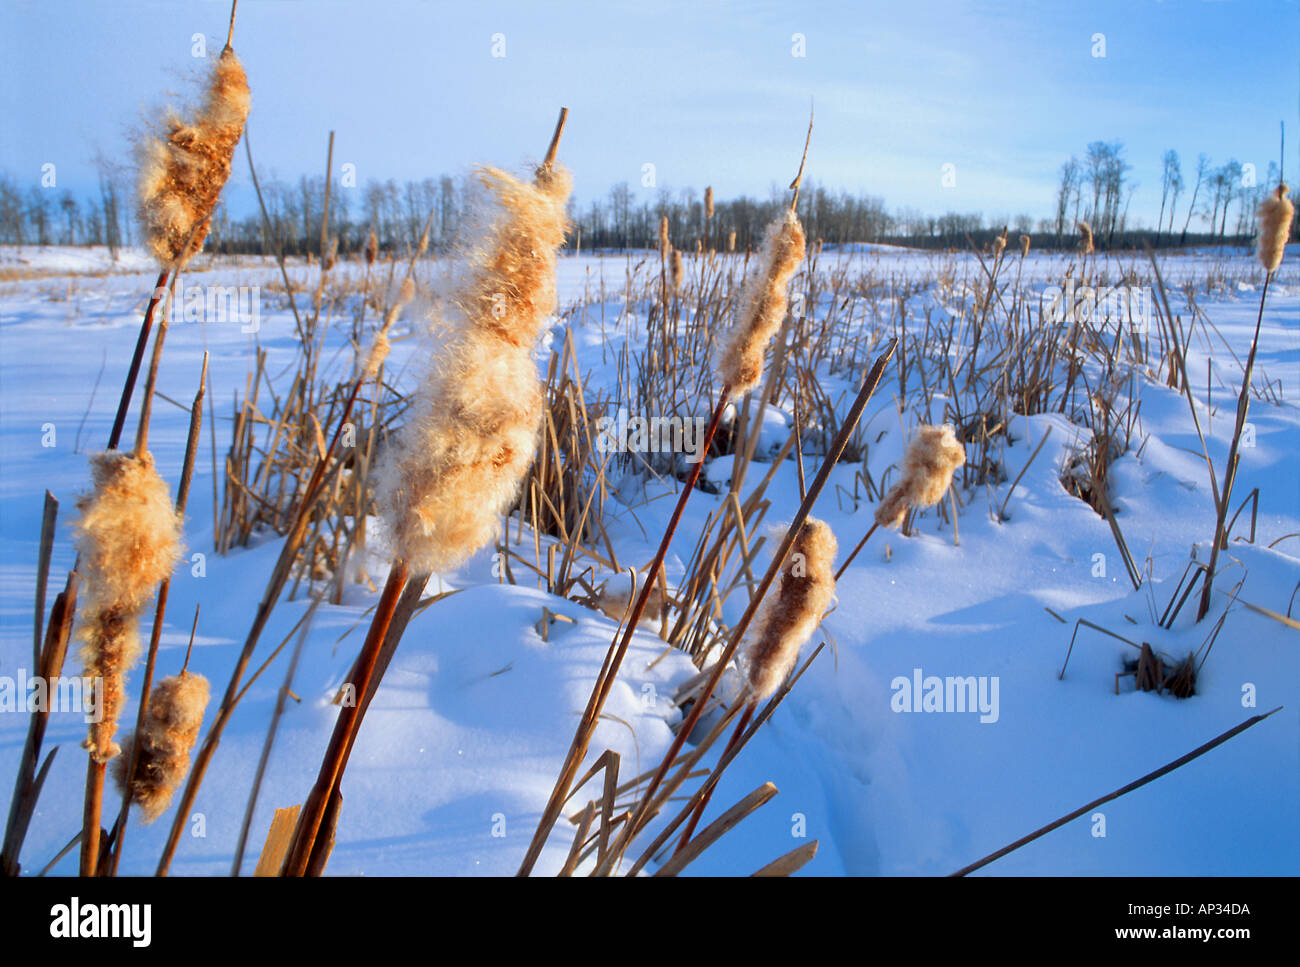 Bulrushes in snowy field Stock Photo